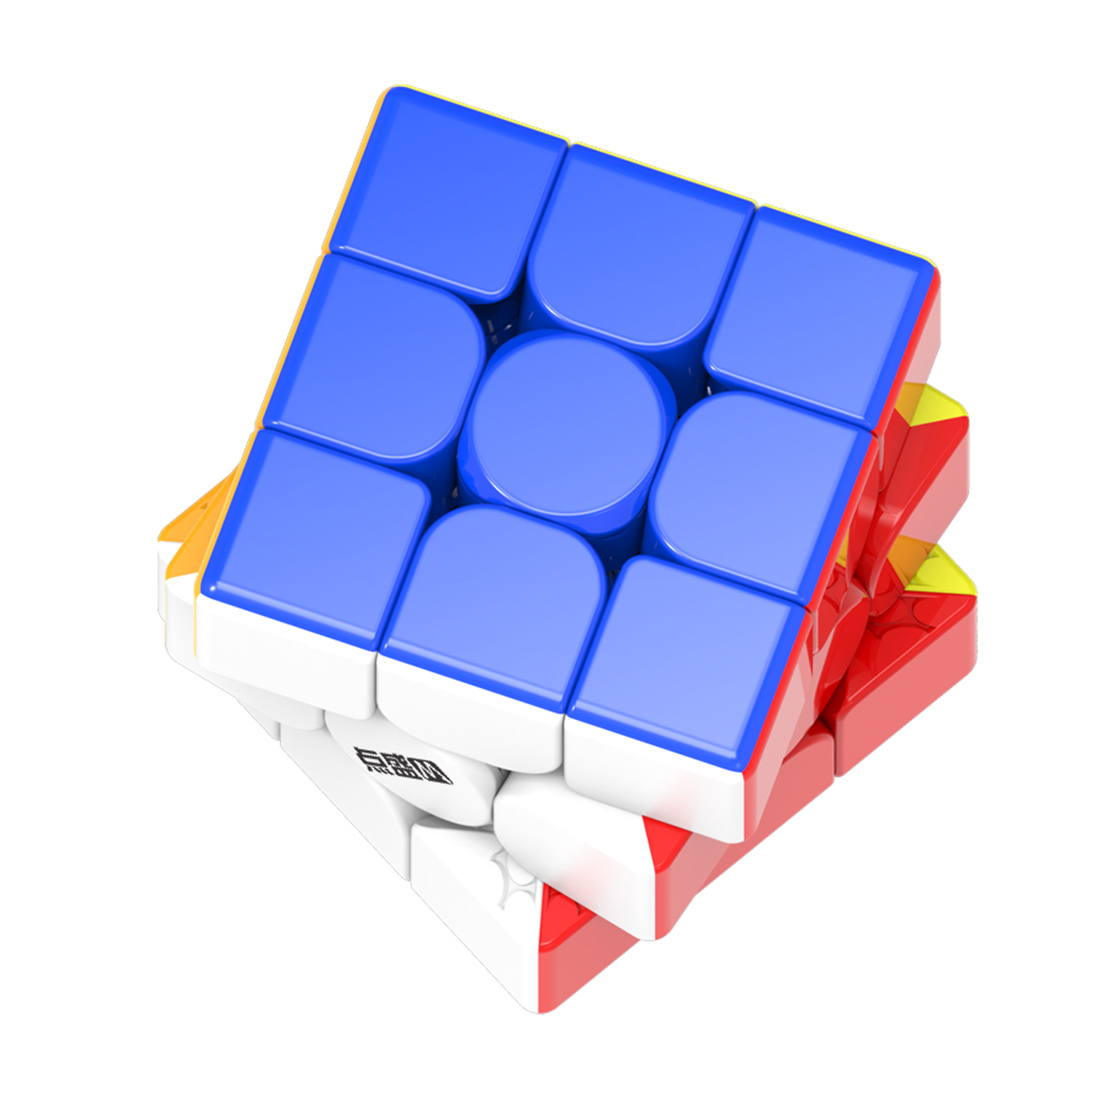 Jurnwey Speed Cube 3x3x3 Stickerless with Cube Lebanon